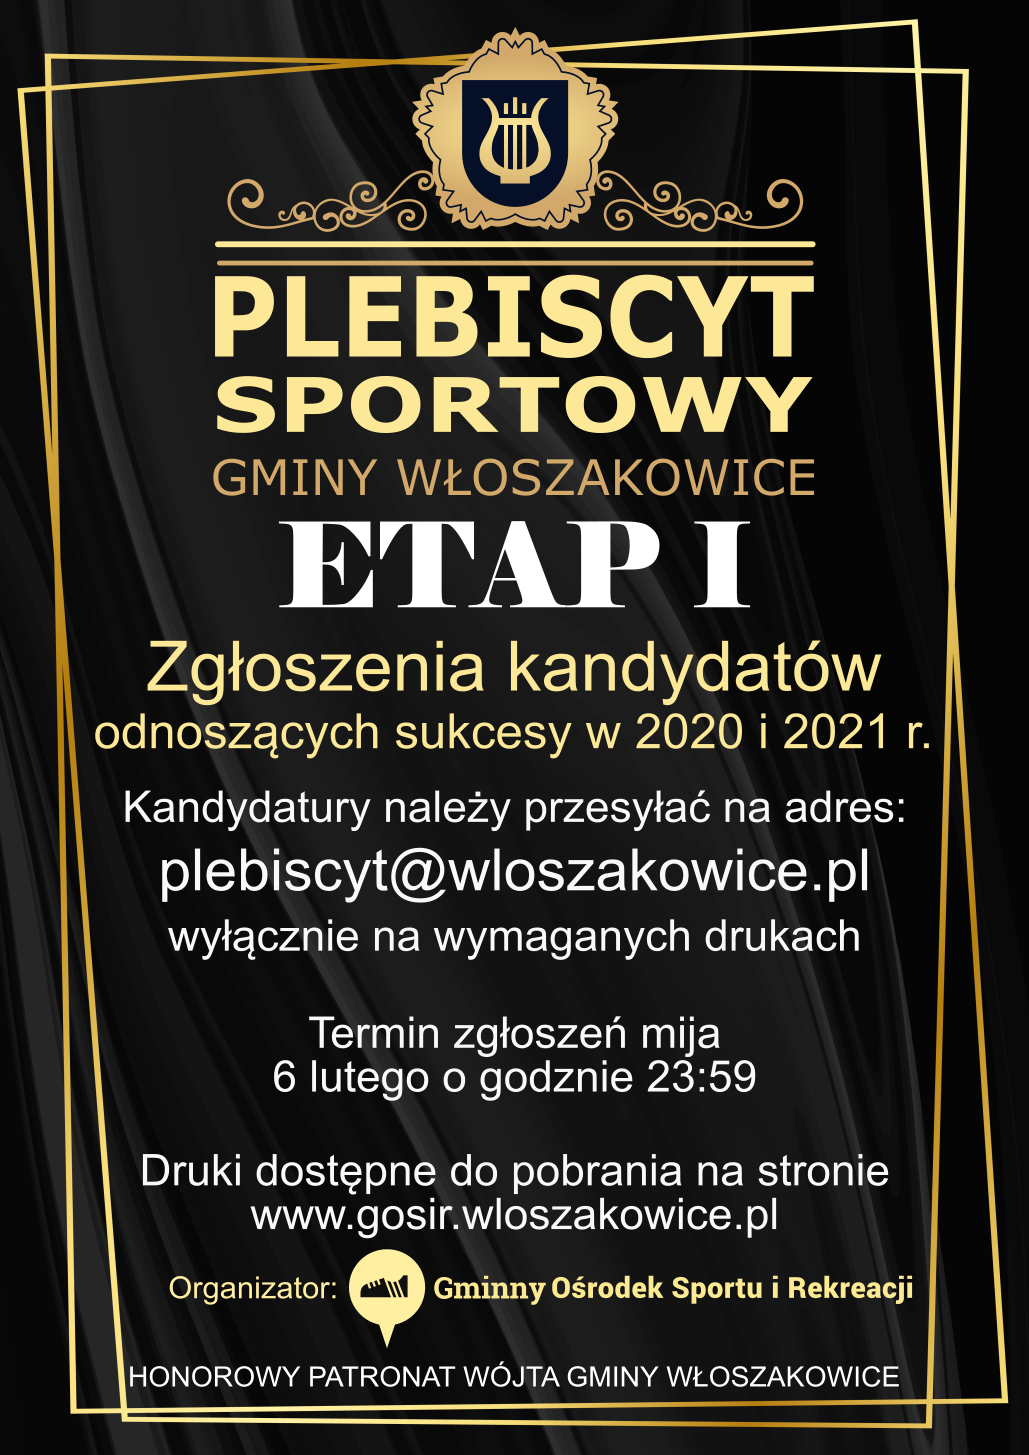 2022.01.20-Plebiscyt_sportowy_etap_I.png - 571,73 kB